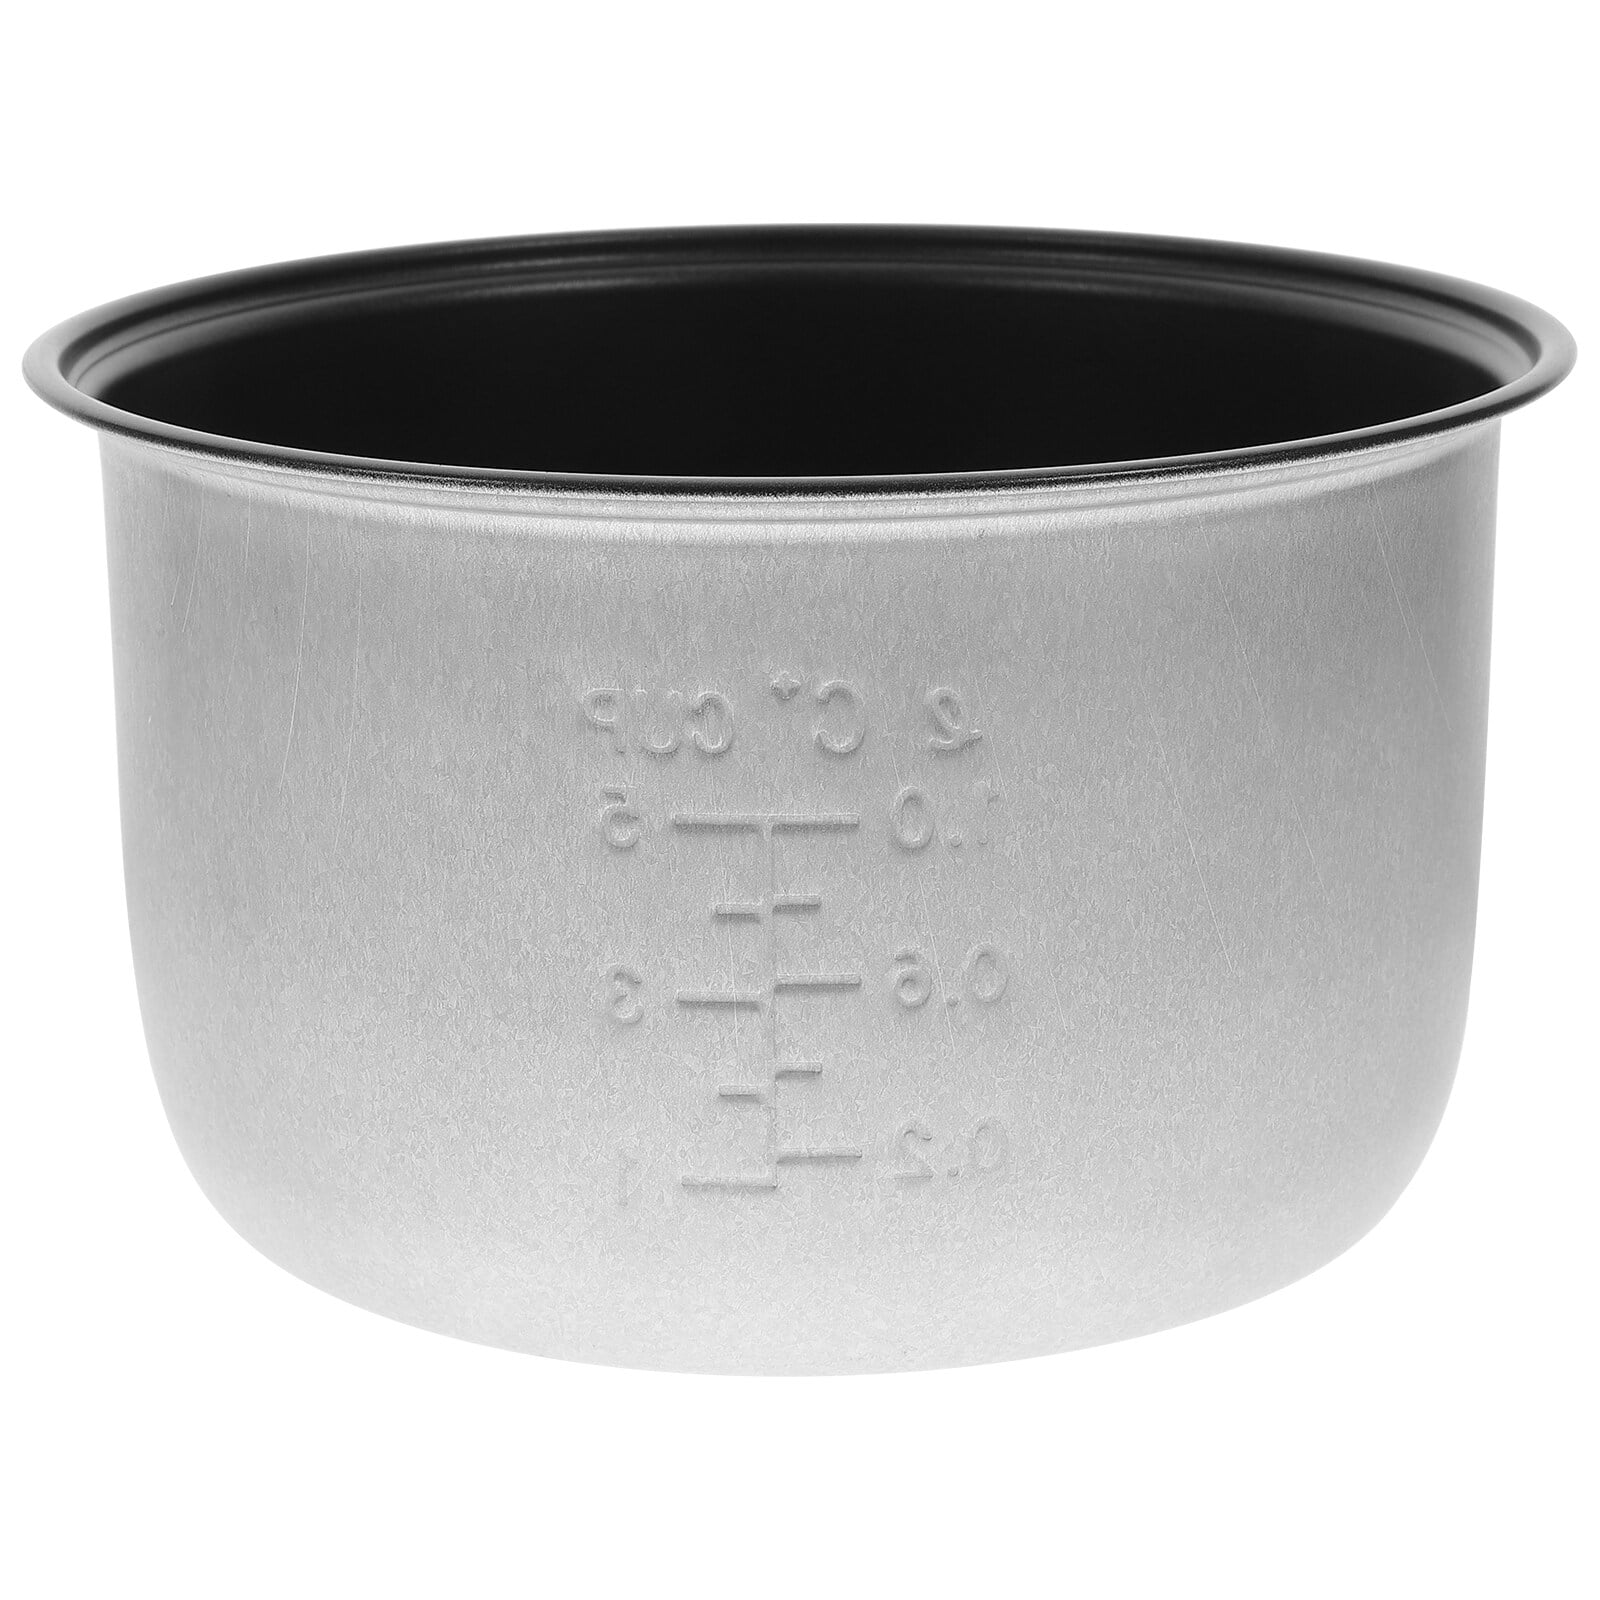 8 Quart Stainless Steel Inner Pot for Ninja Foodi - Replacement Liner